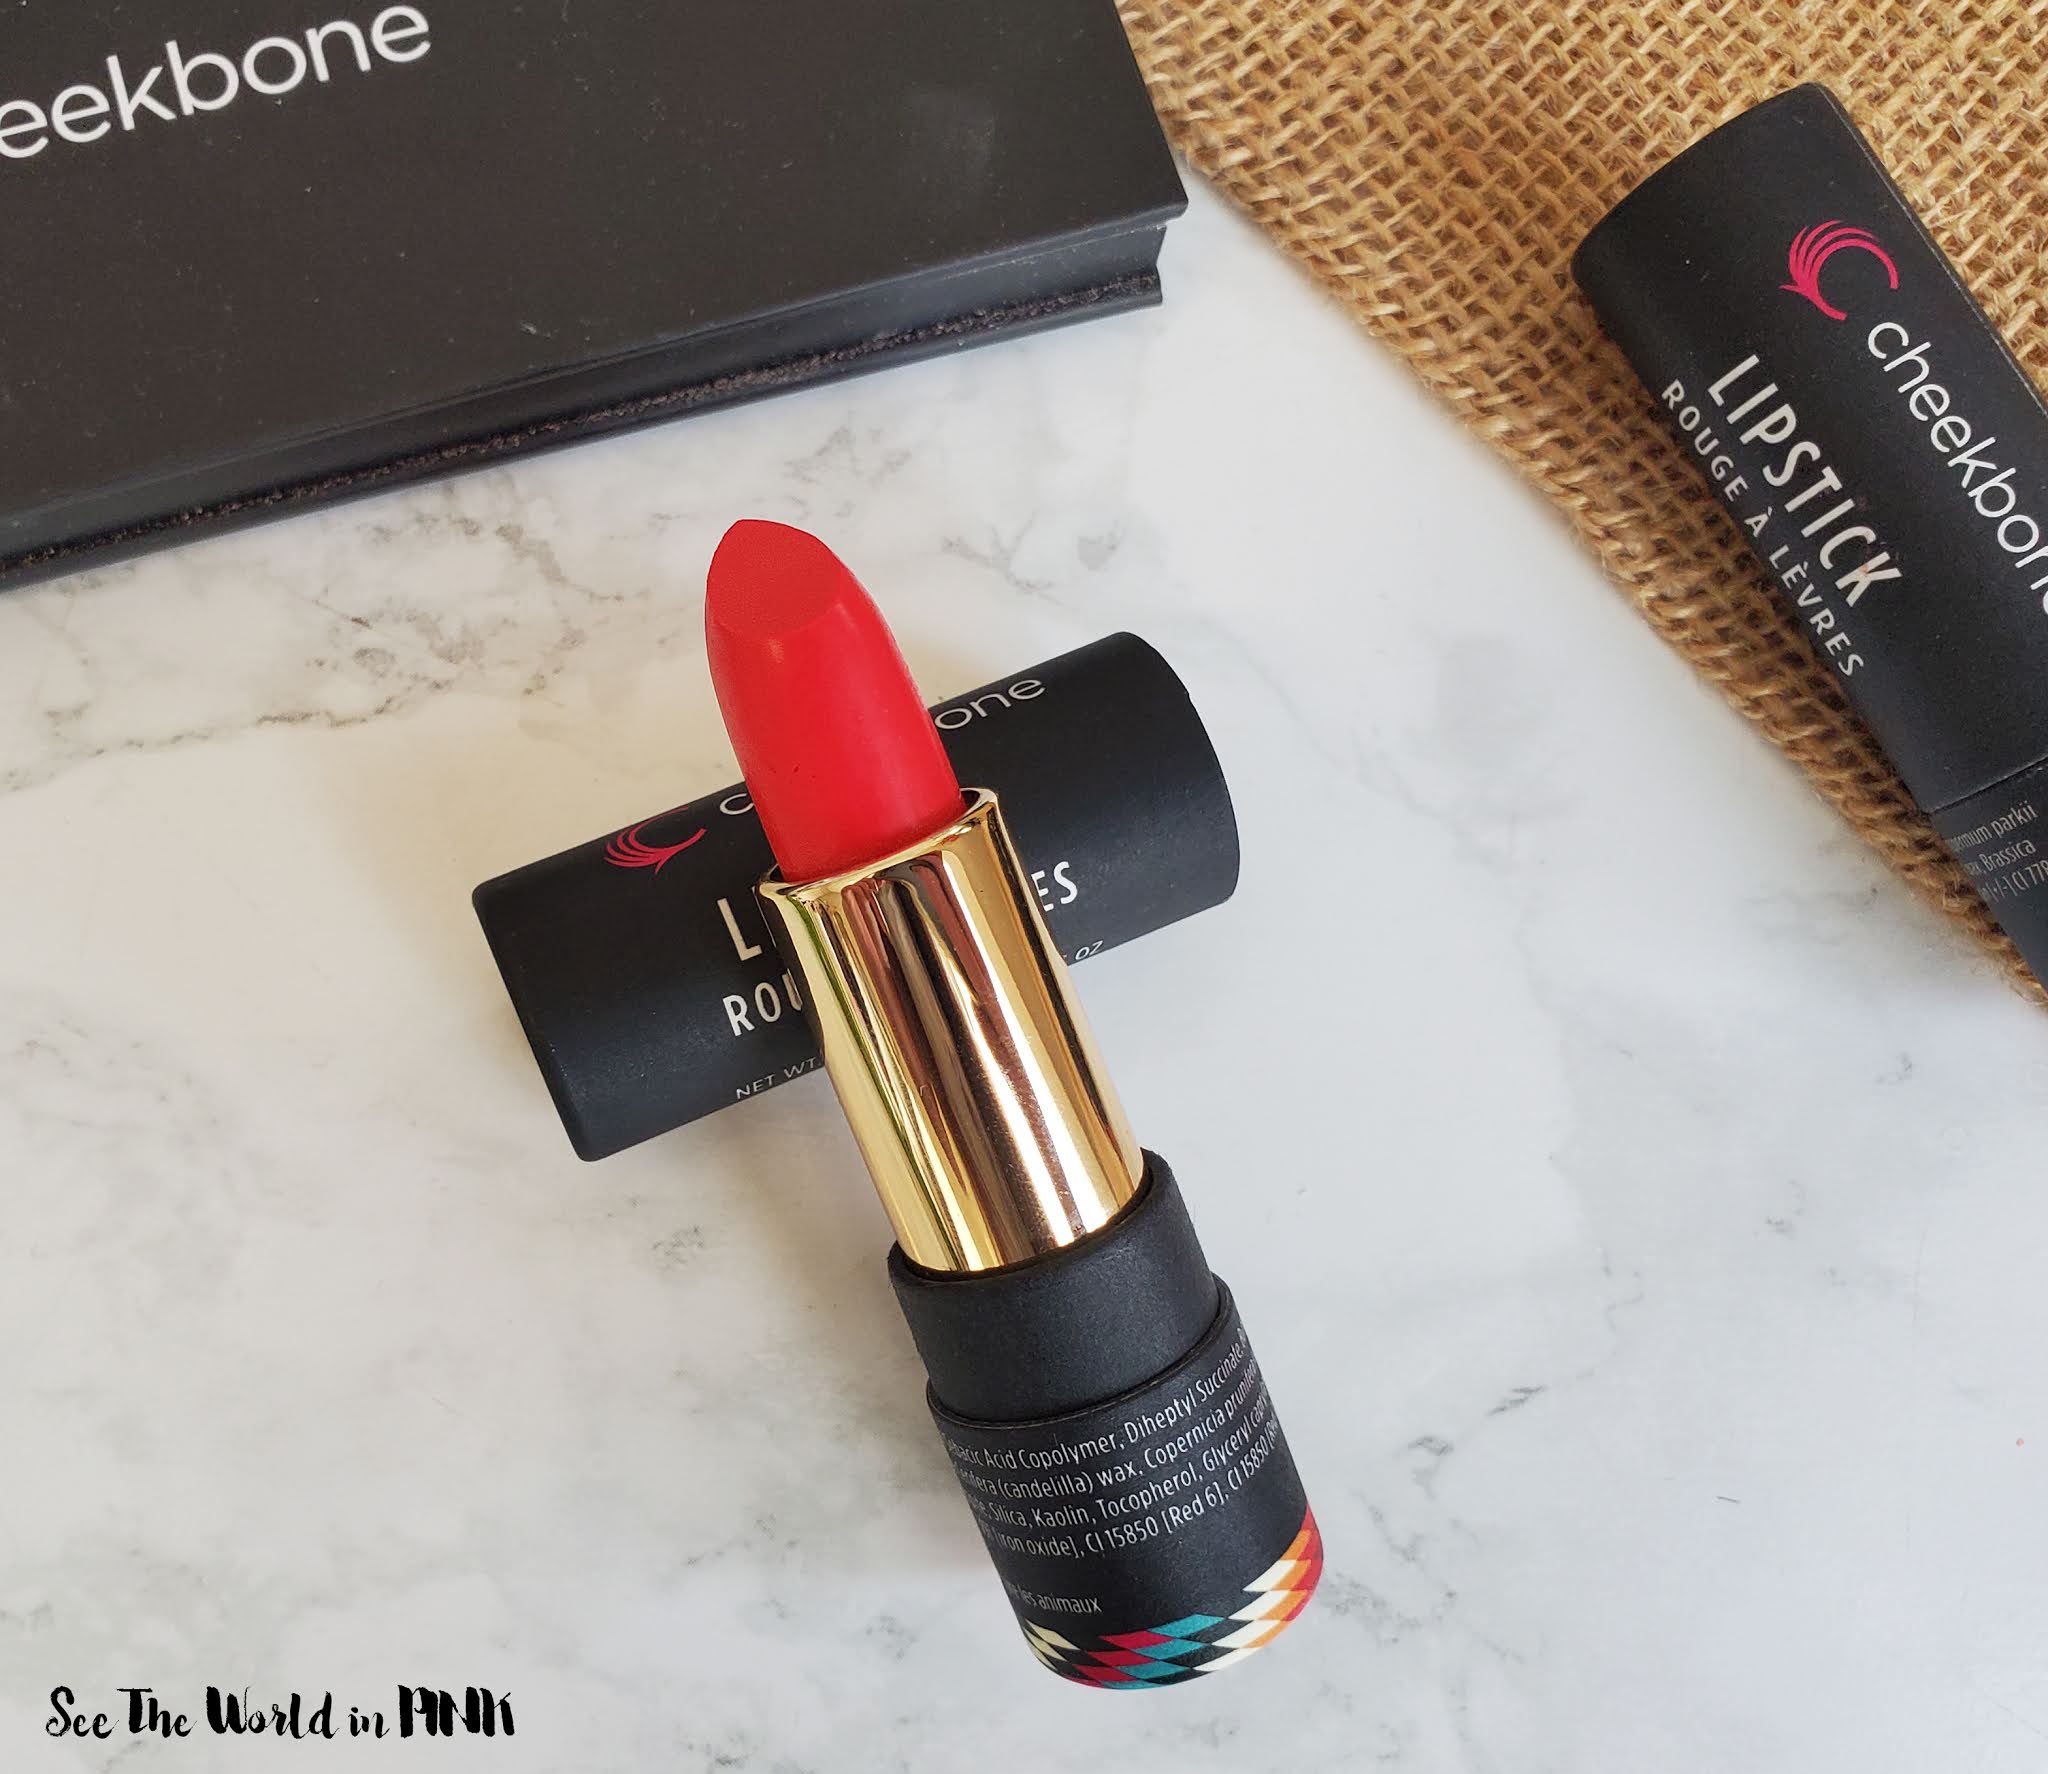 New Cheekbone Beauty Sustain Lipsticks in Haki & Aina